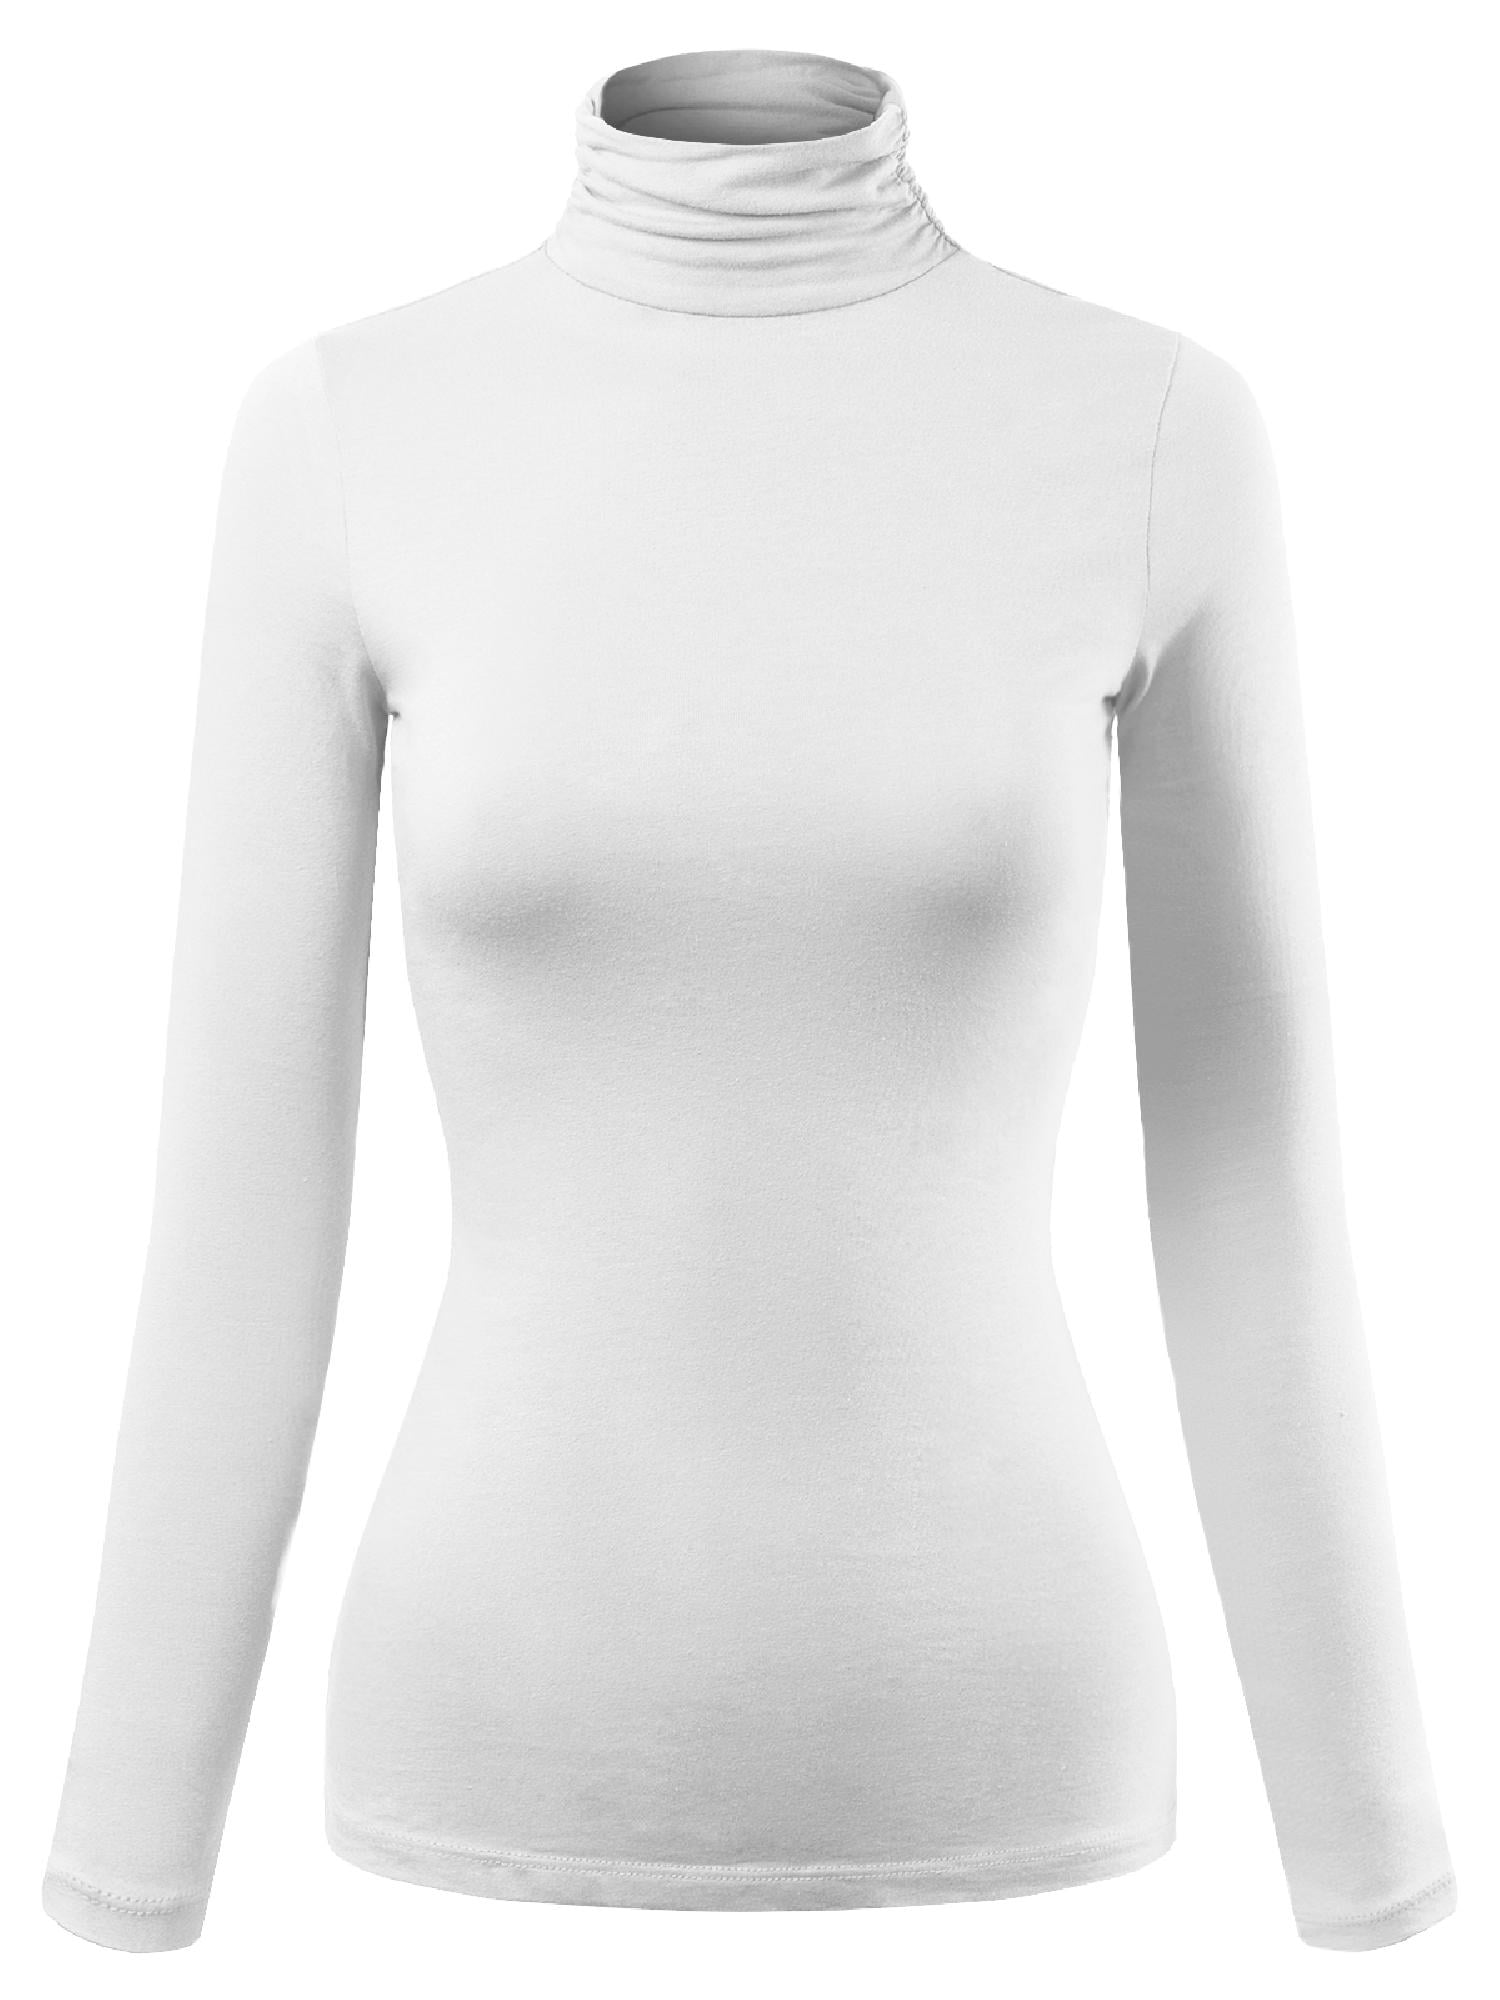 MixMatchy Women's Basic Long Sleeve High Turtle Neck Slim Fit Top Shirt ...